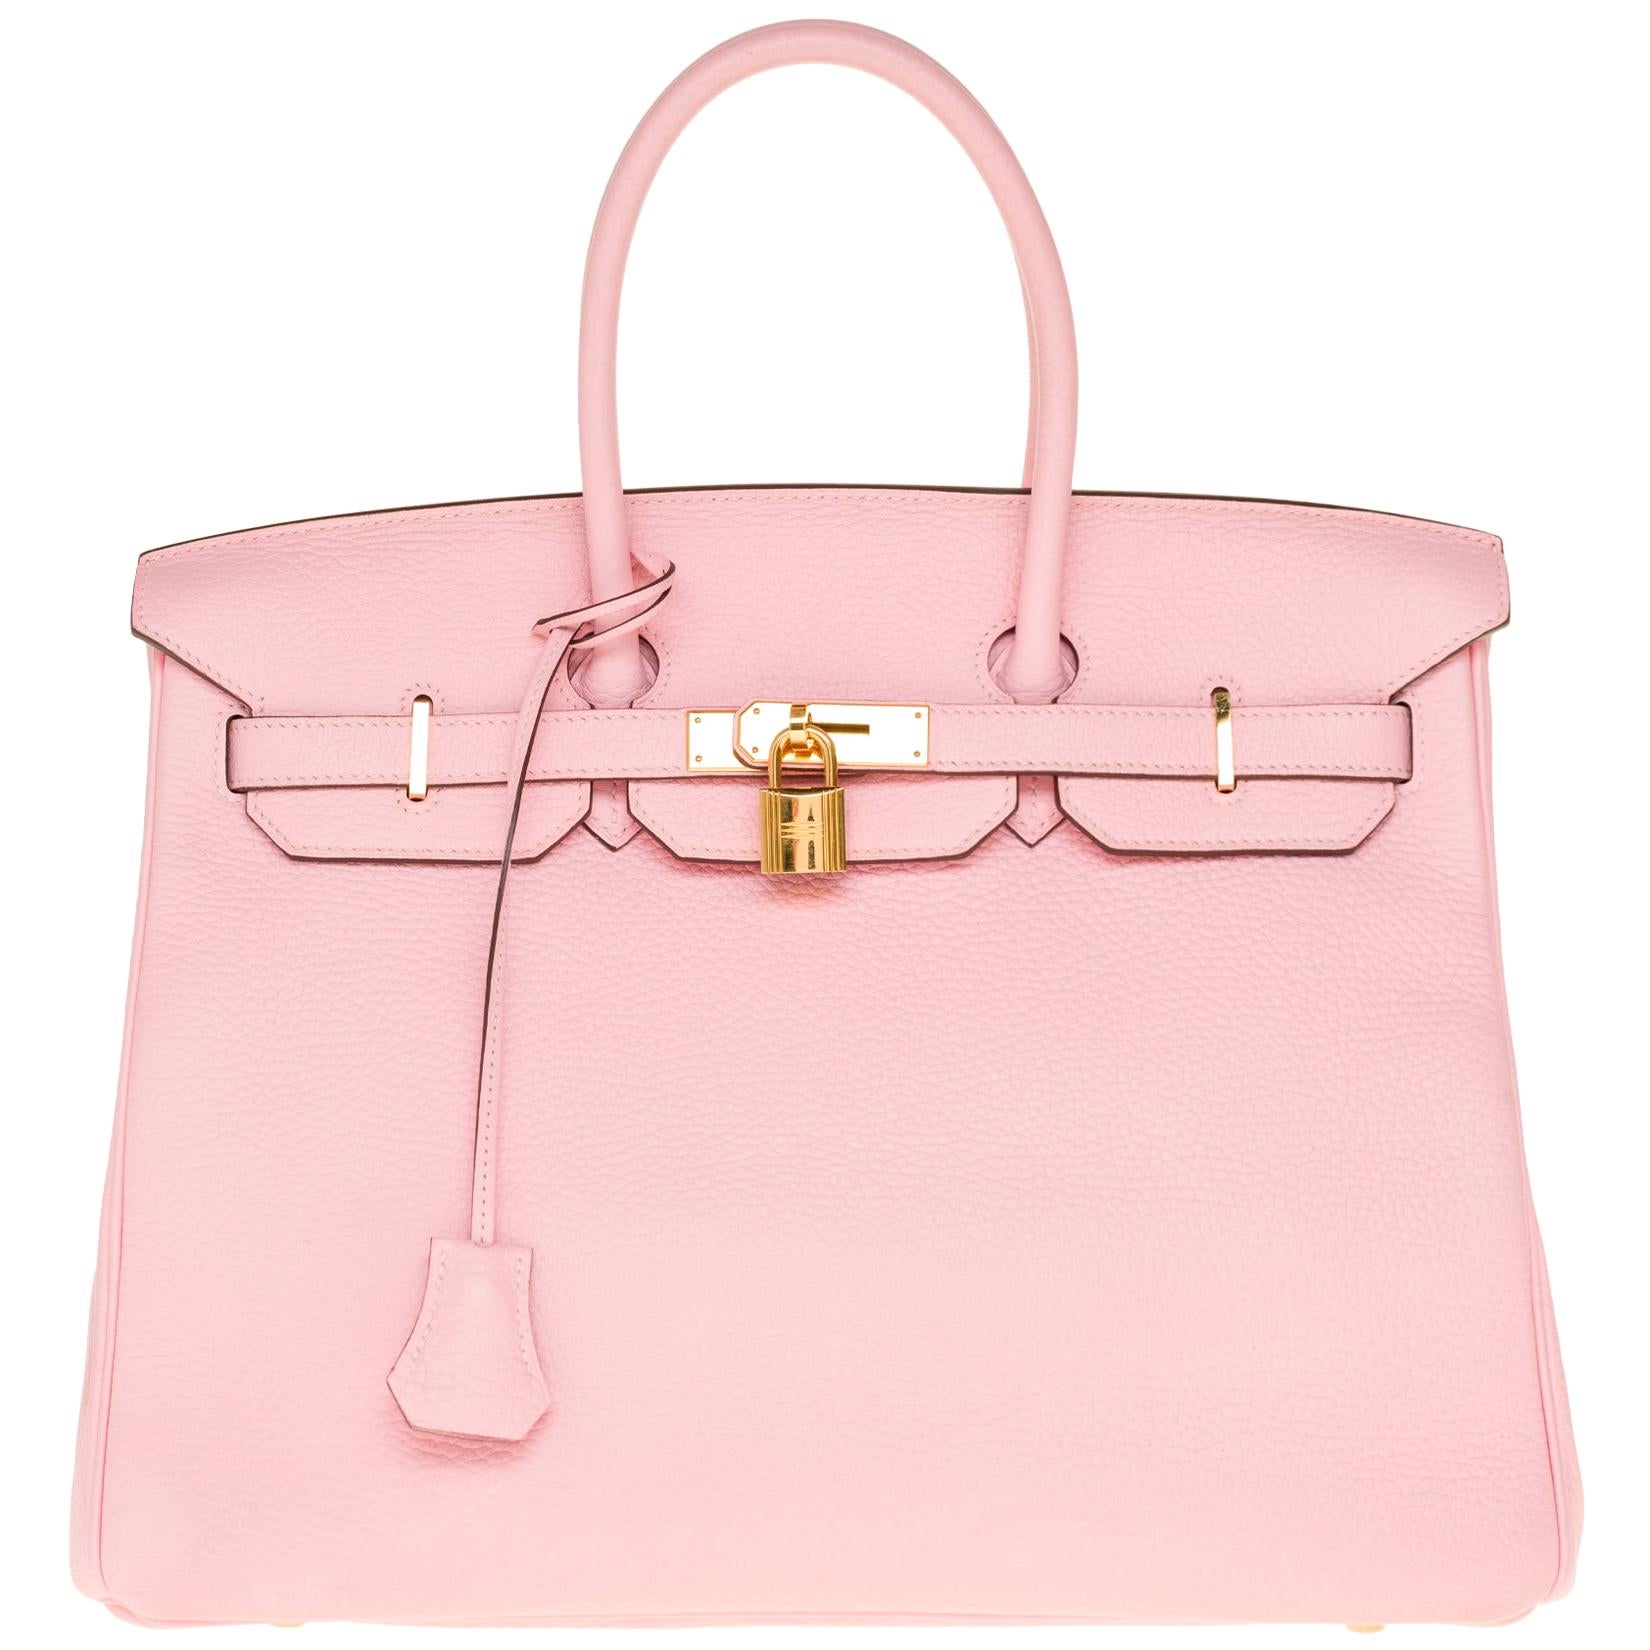 Hermès - Authenticated Birkin 40 Handbag - Leather Pink Plain for Women, Good Condition